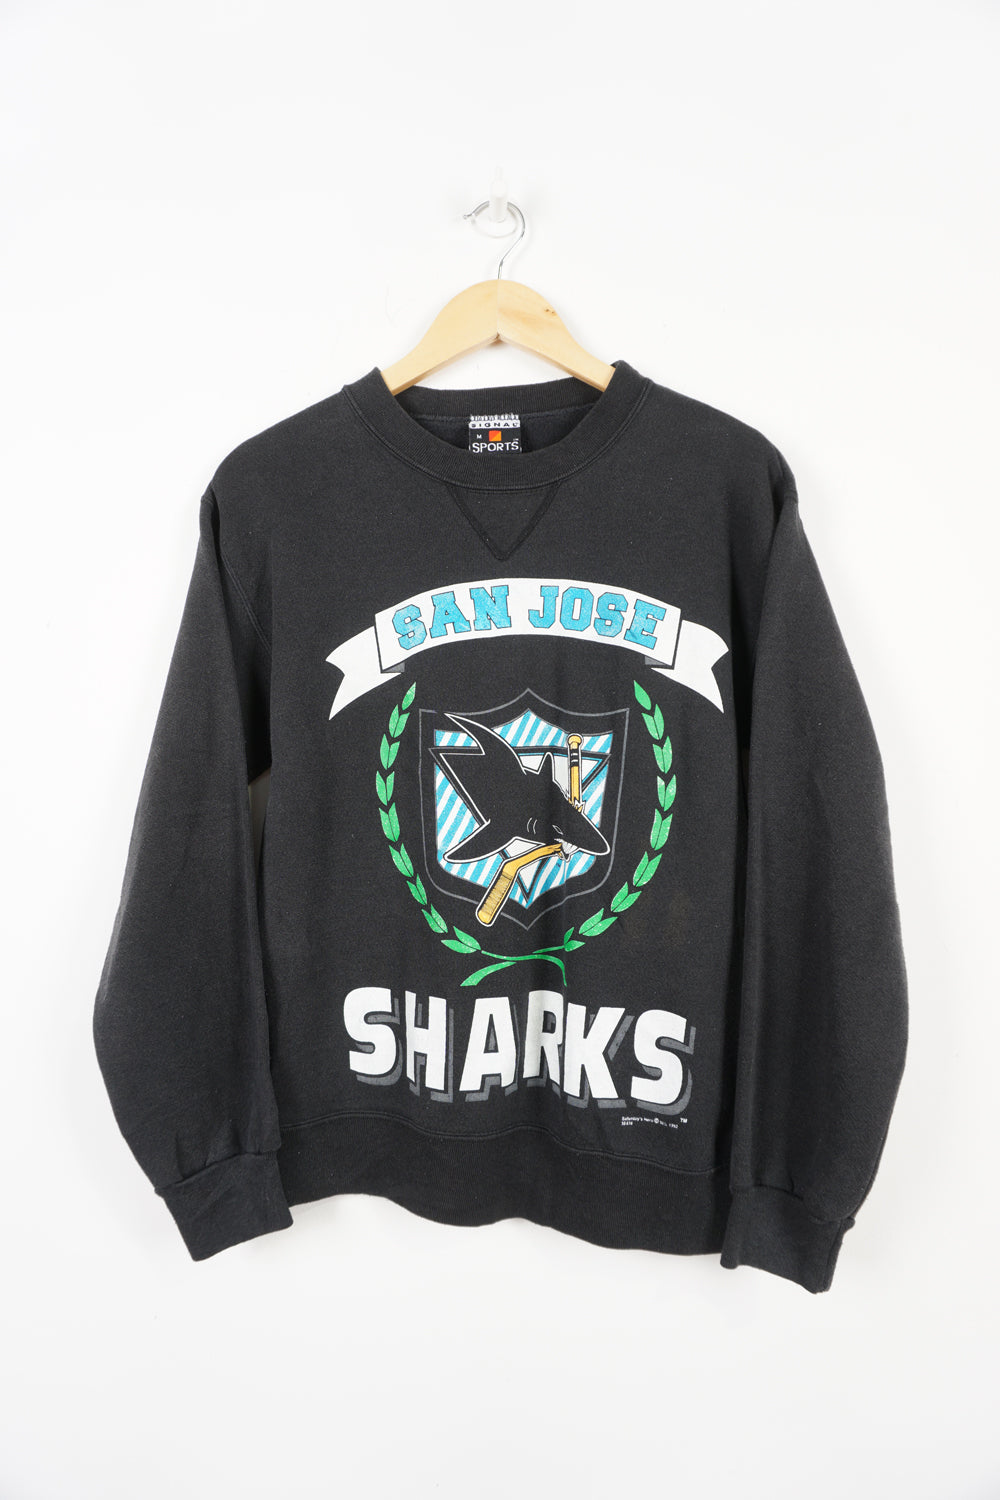 Vintage San Jose Sharks NHL Hockey Crewneck Sweatshirt Men Women